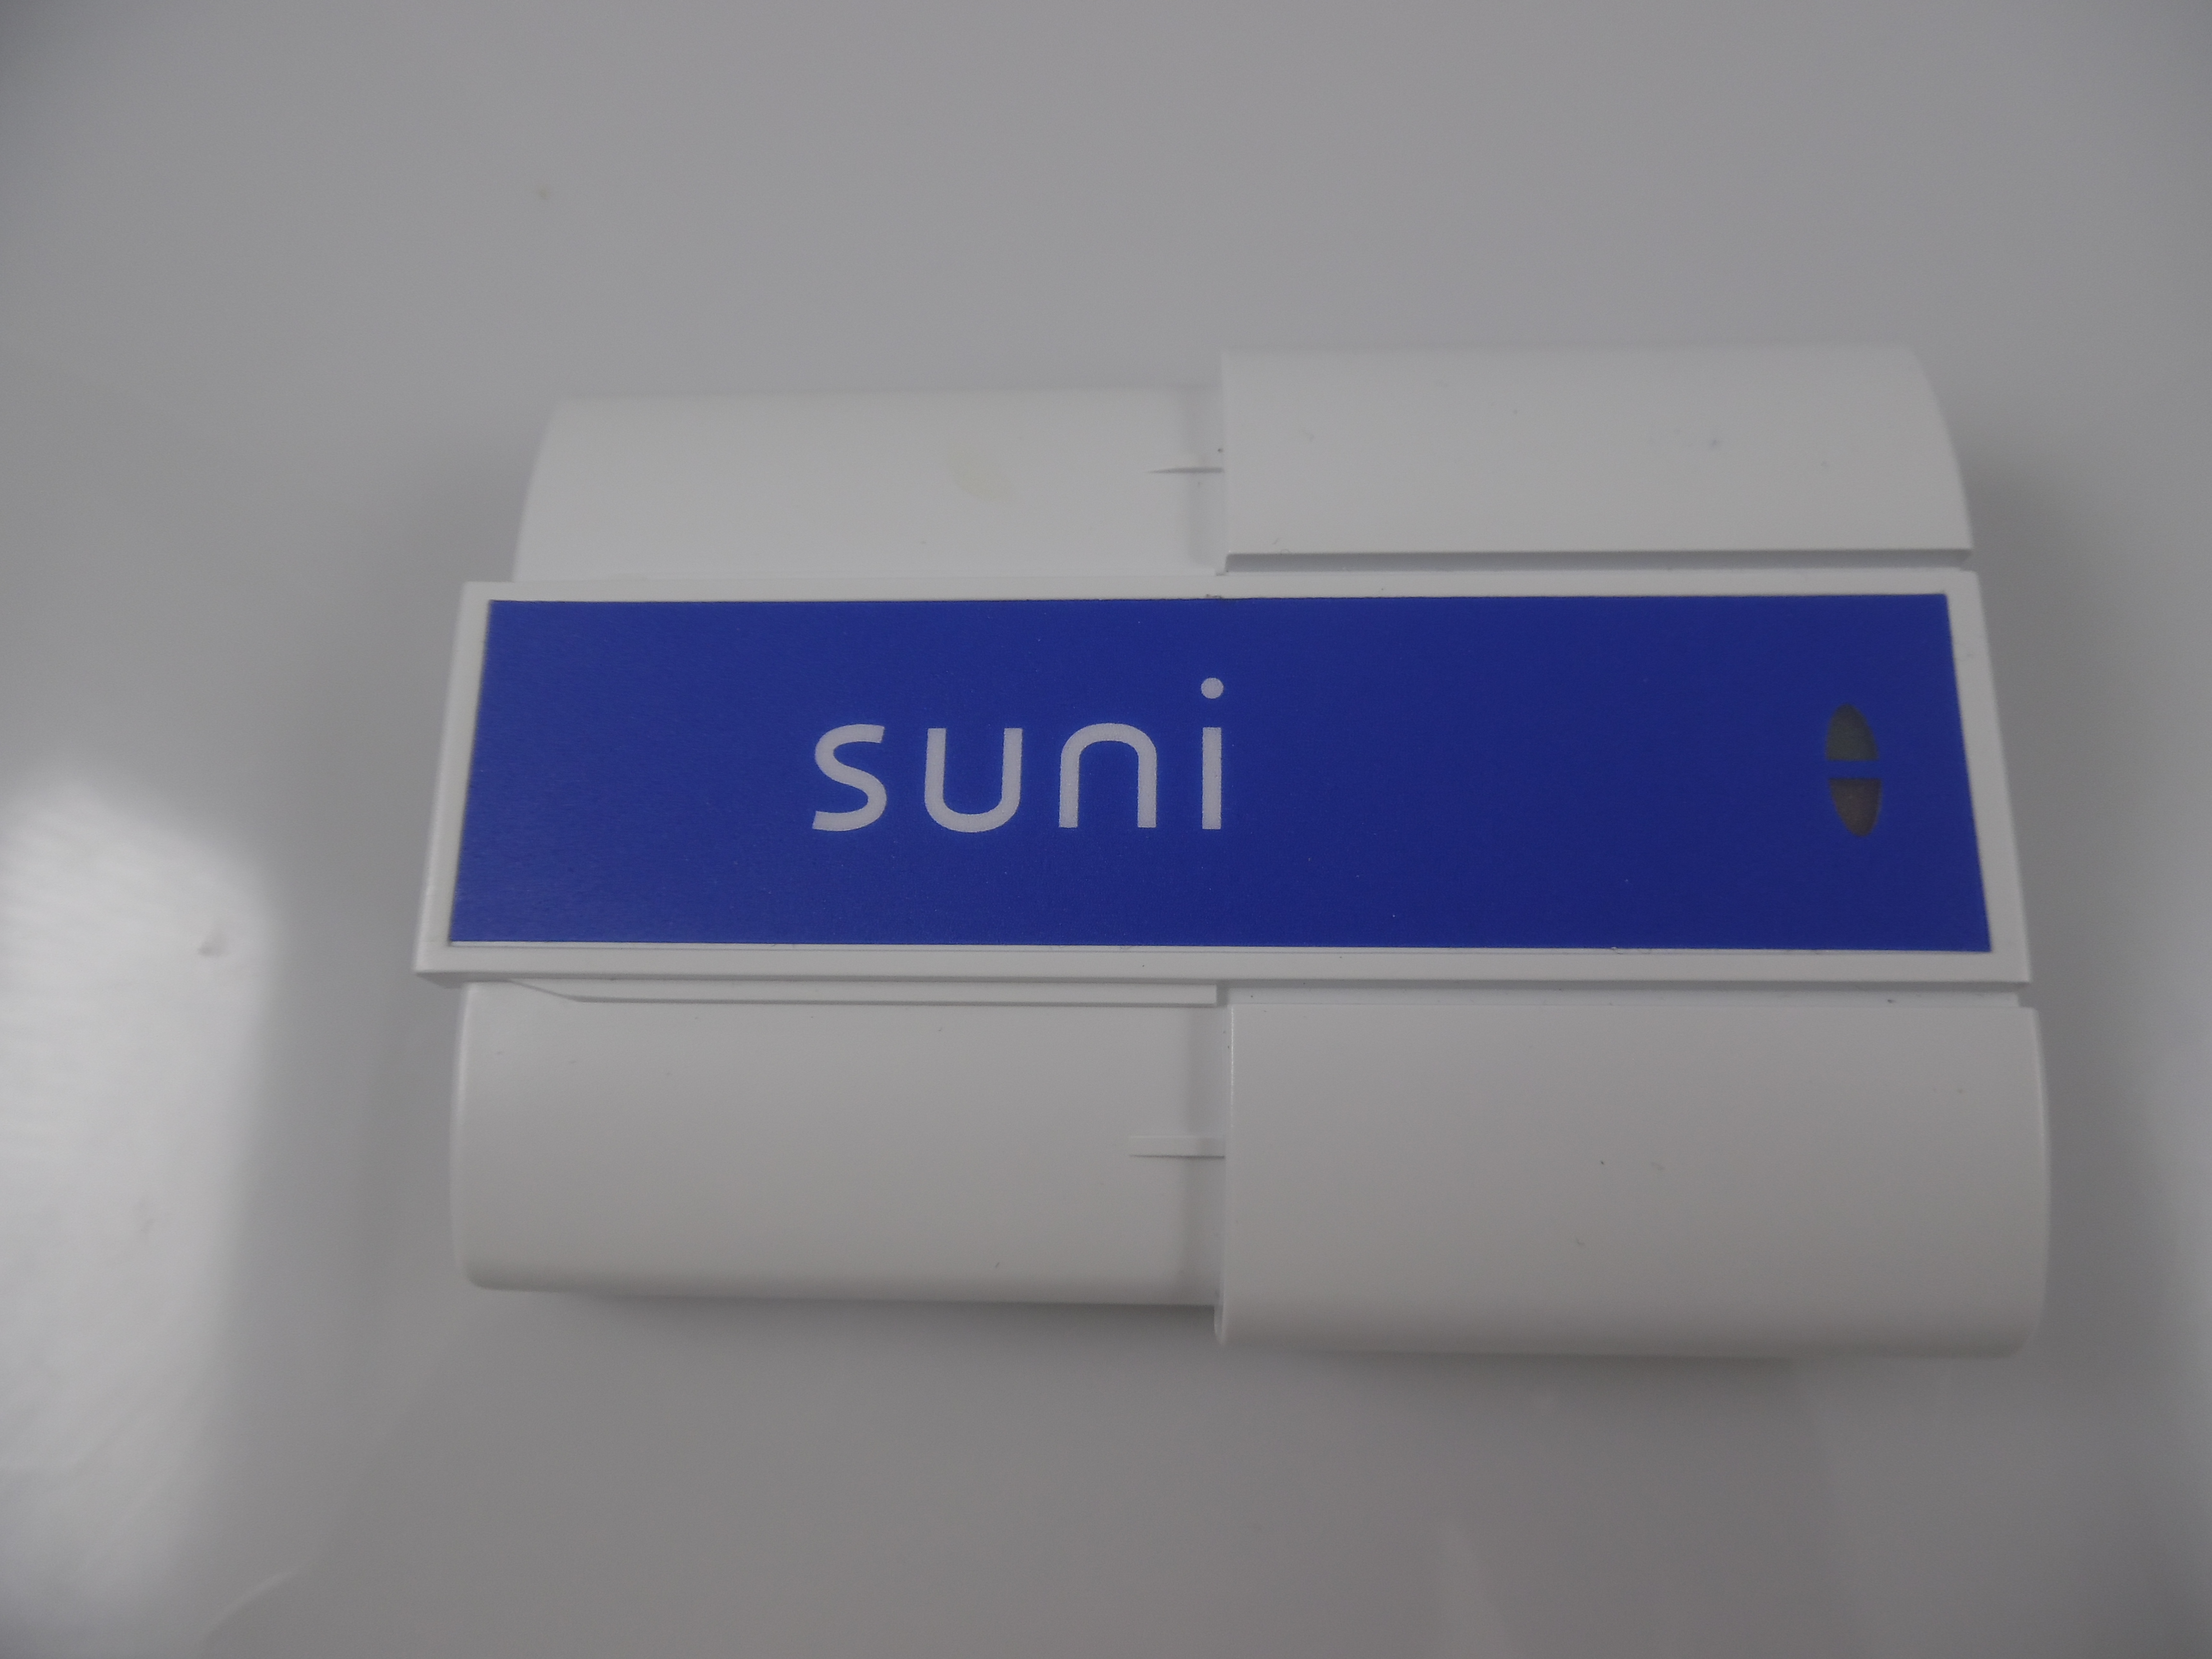 Used Suni X-ray Sensors